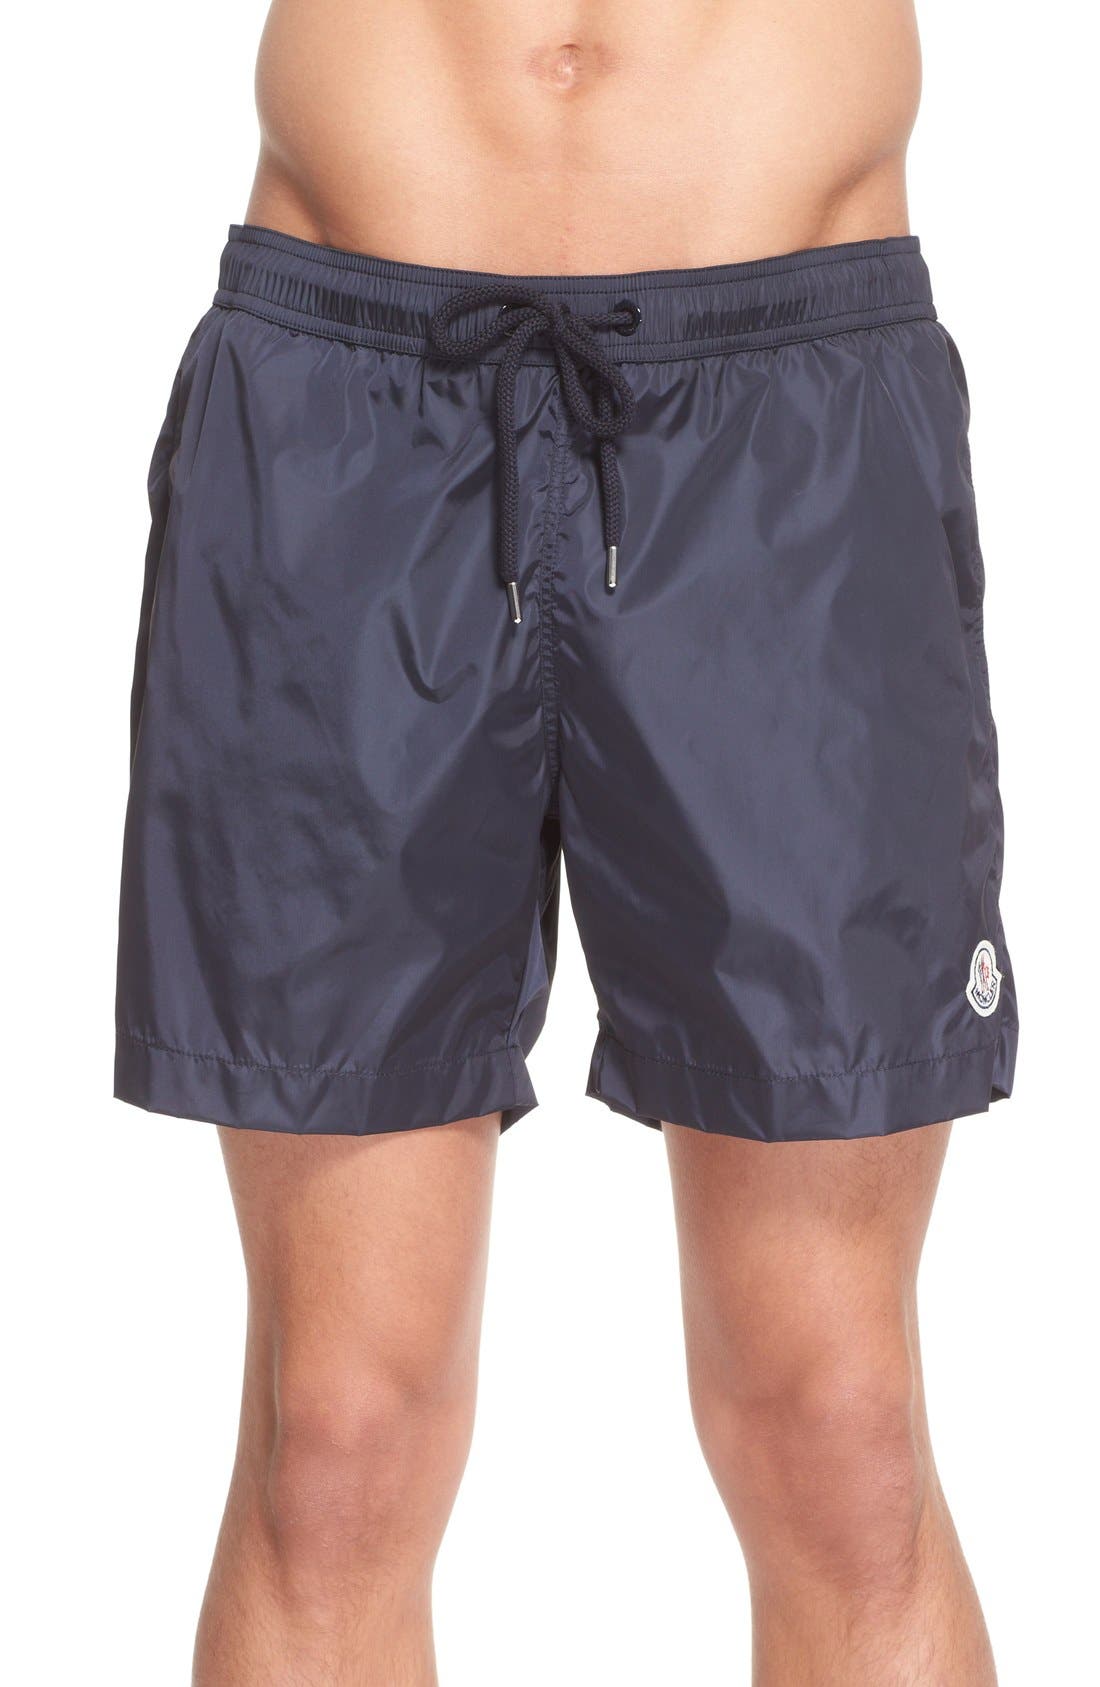 moncler swim shorts sale